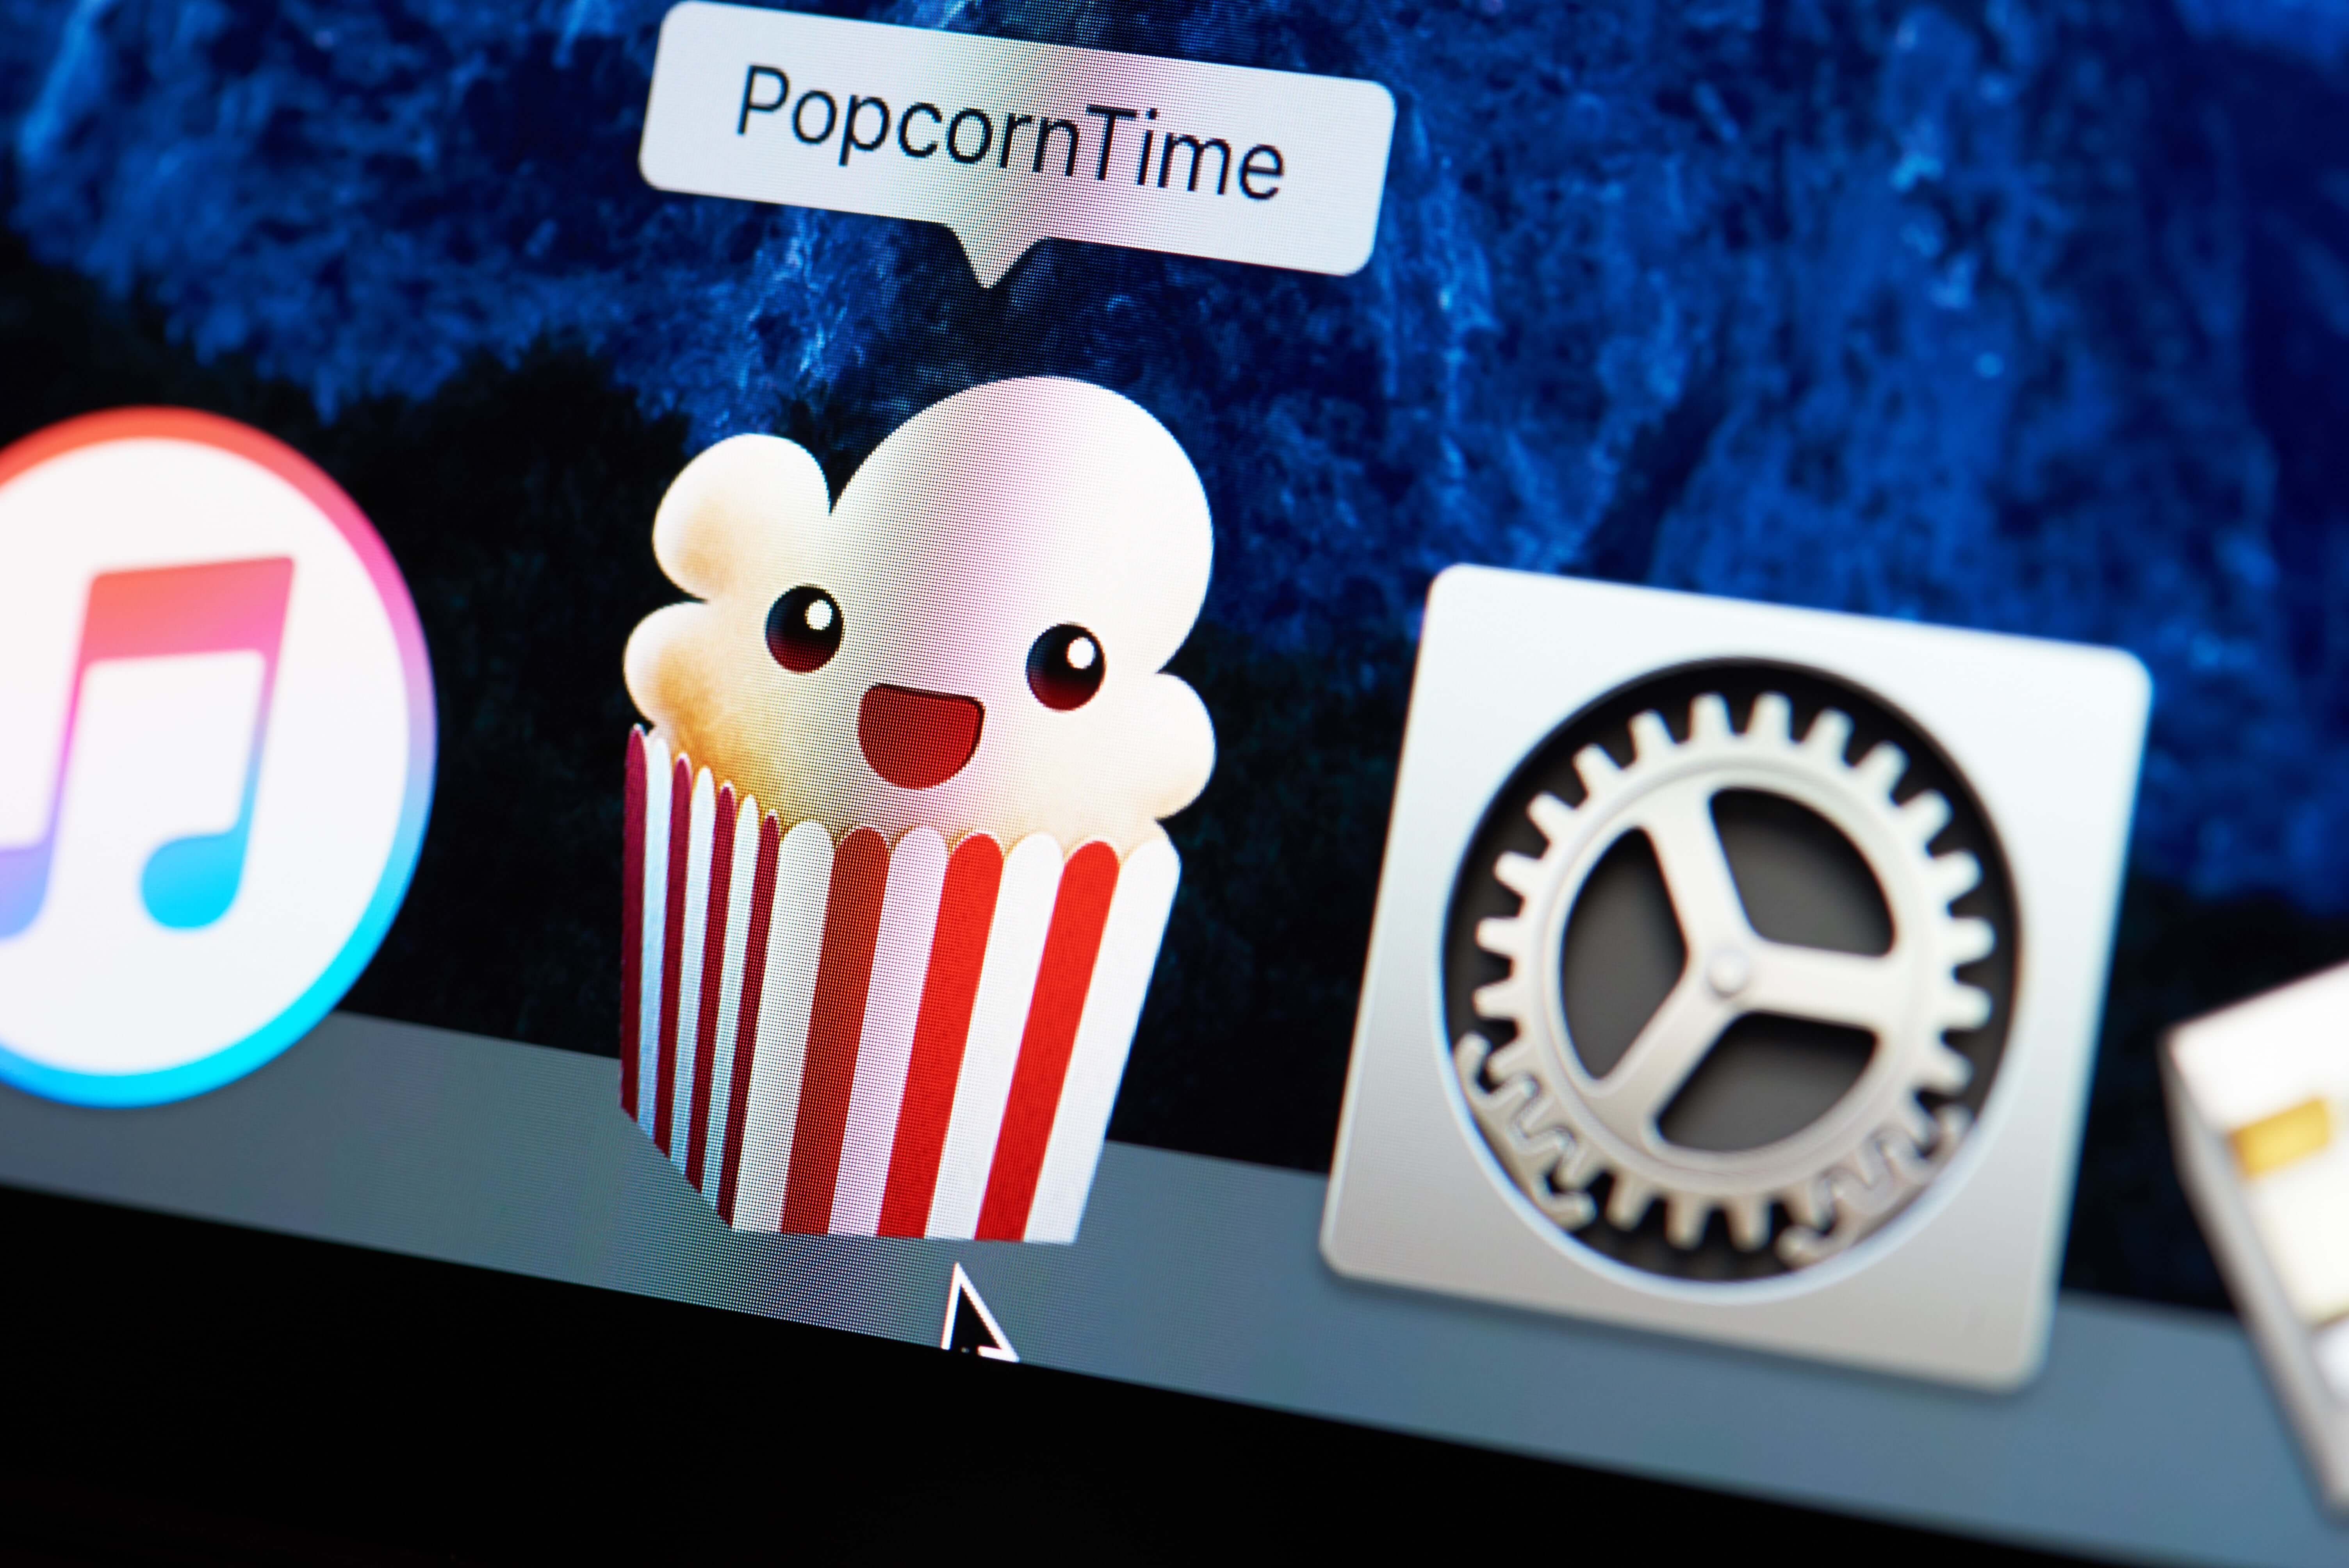 is popcorn time safe without vpn